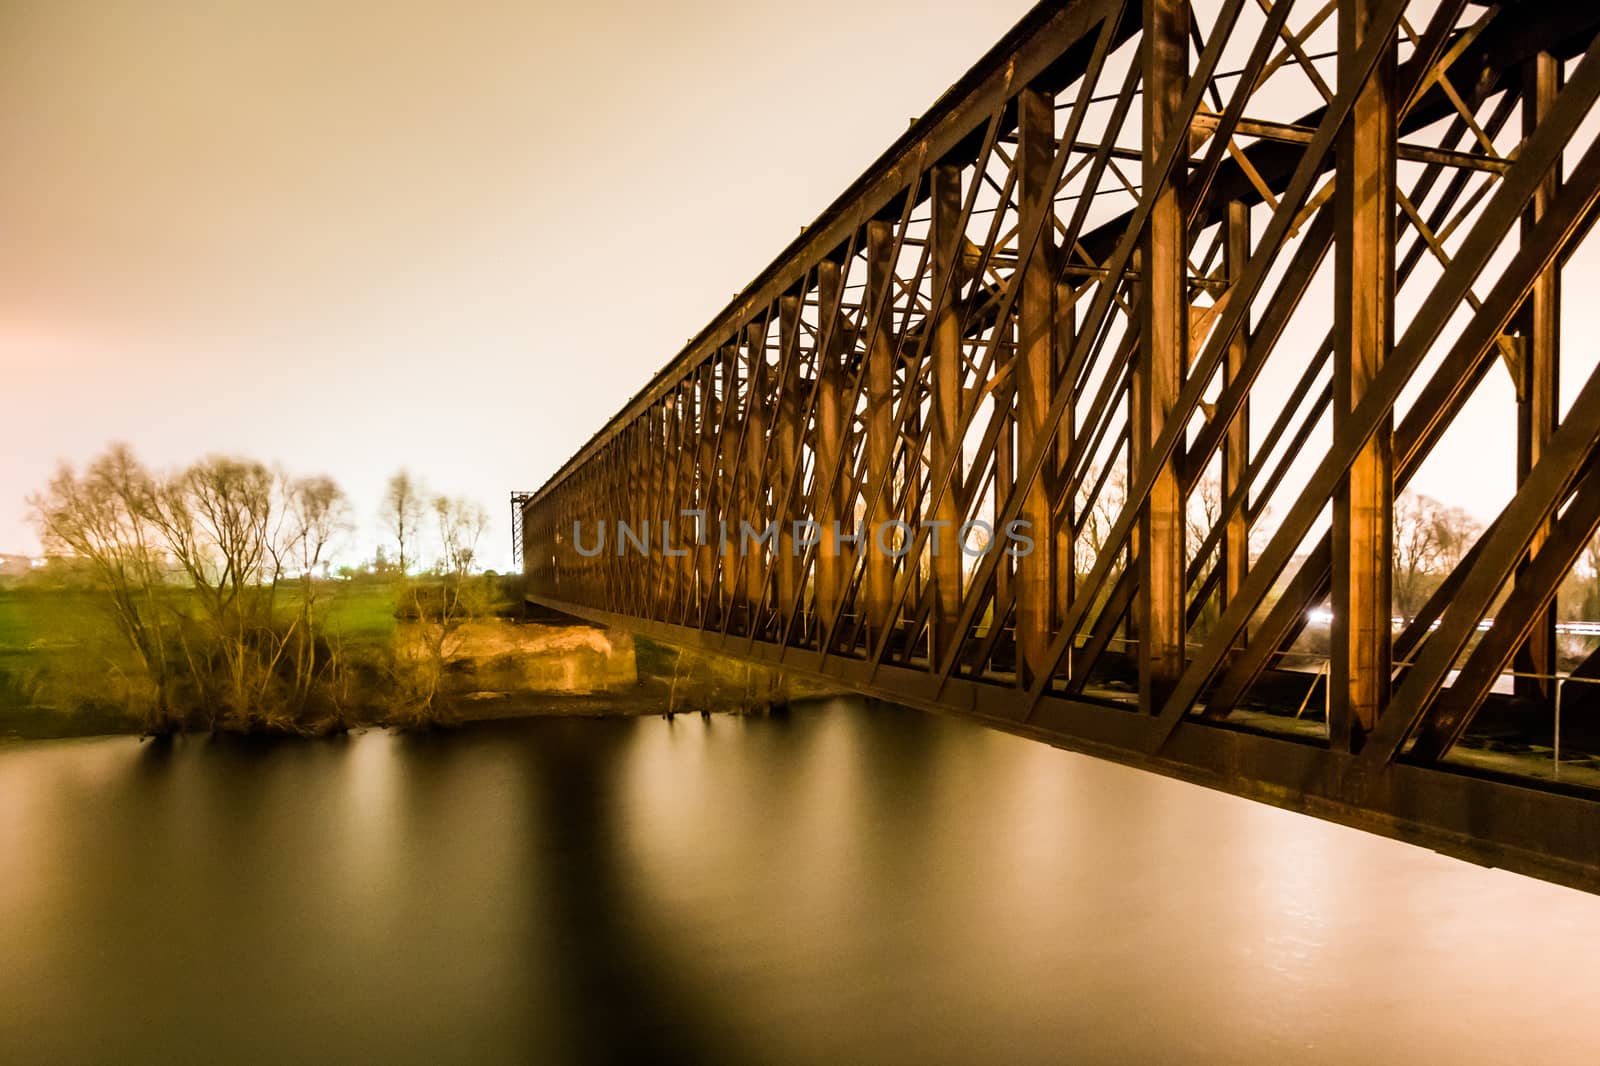 Old industrial railway railroad iron bridge in the night by MXW_Stock